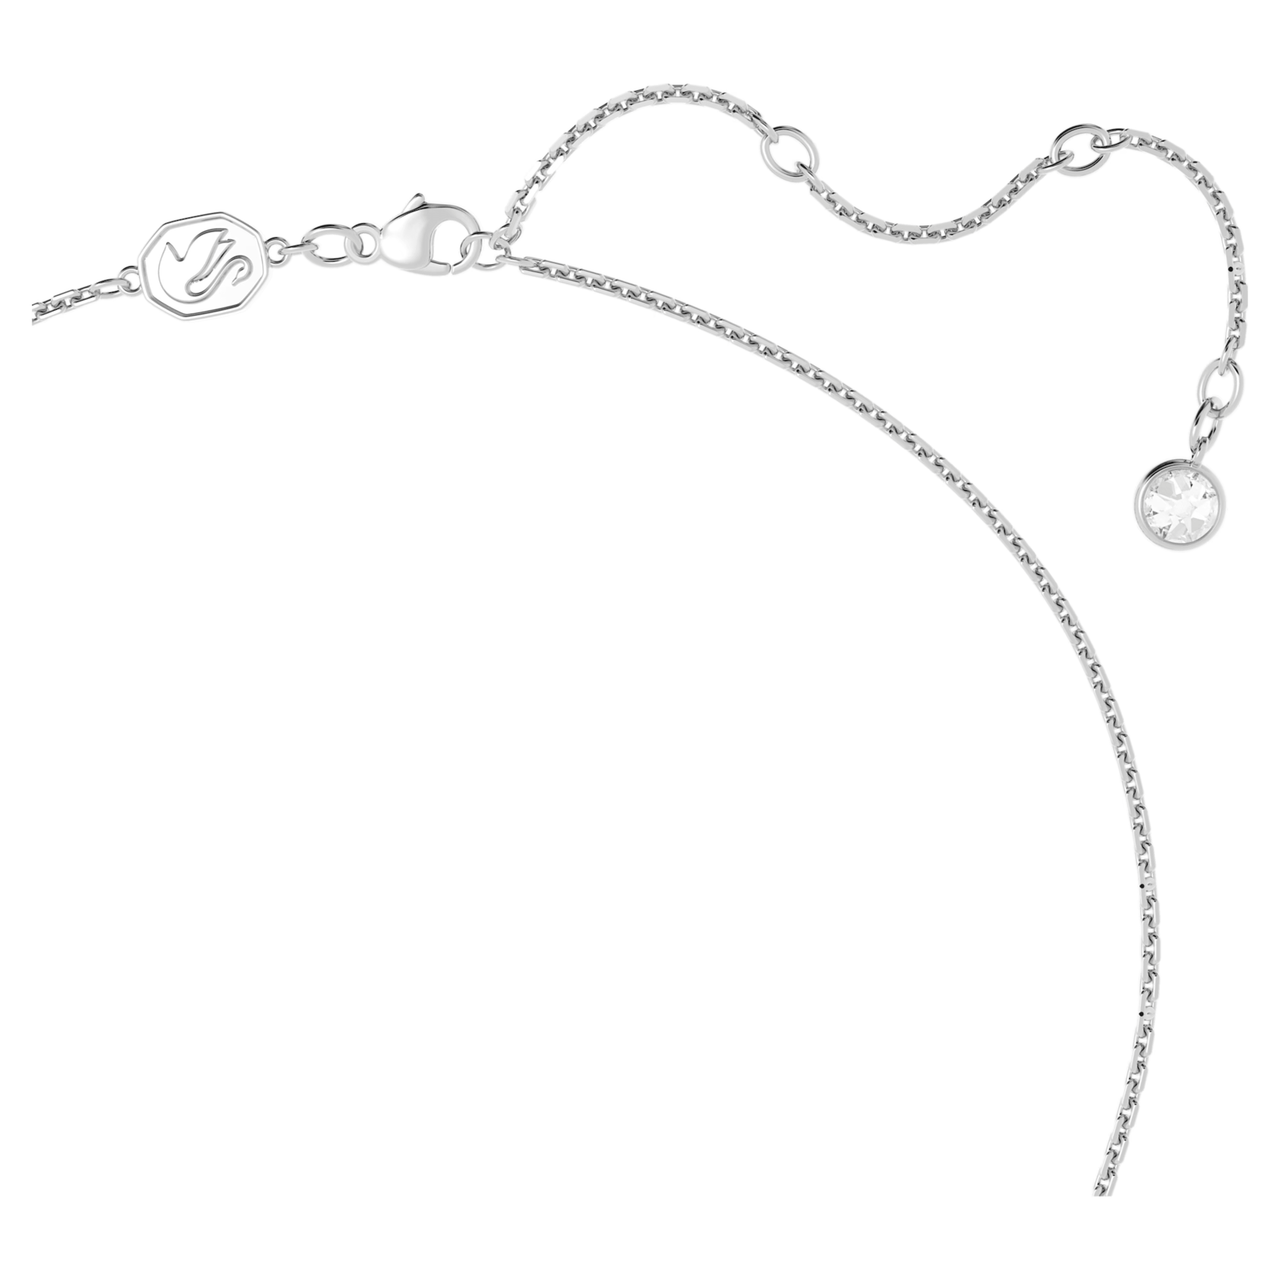 Swarovski Una Pendant Heart Large Necklace White Rhodium Plated 5626176